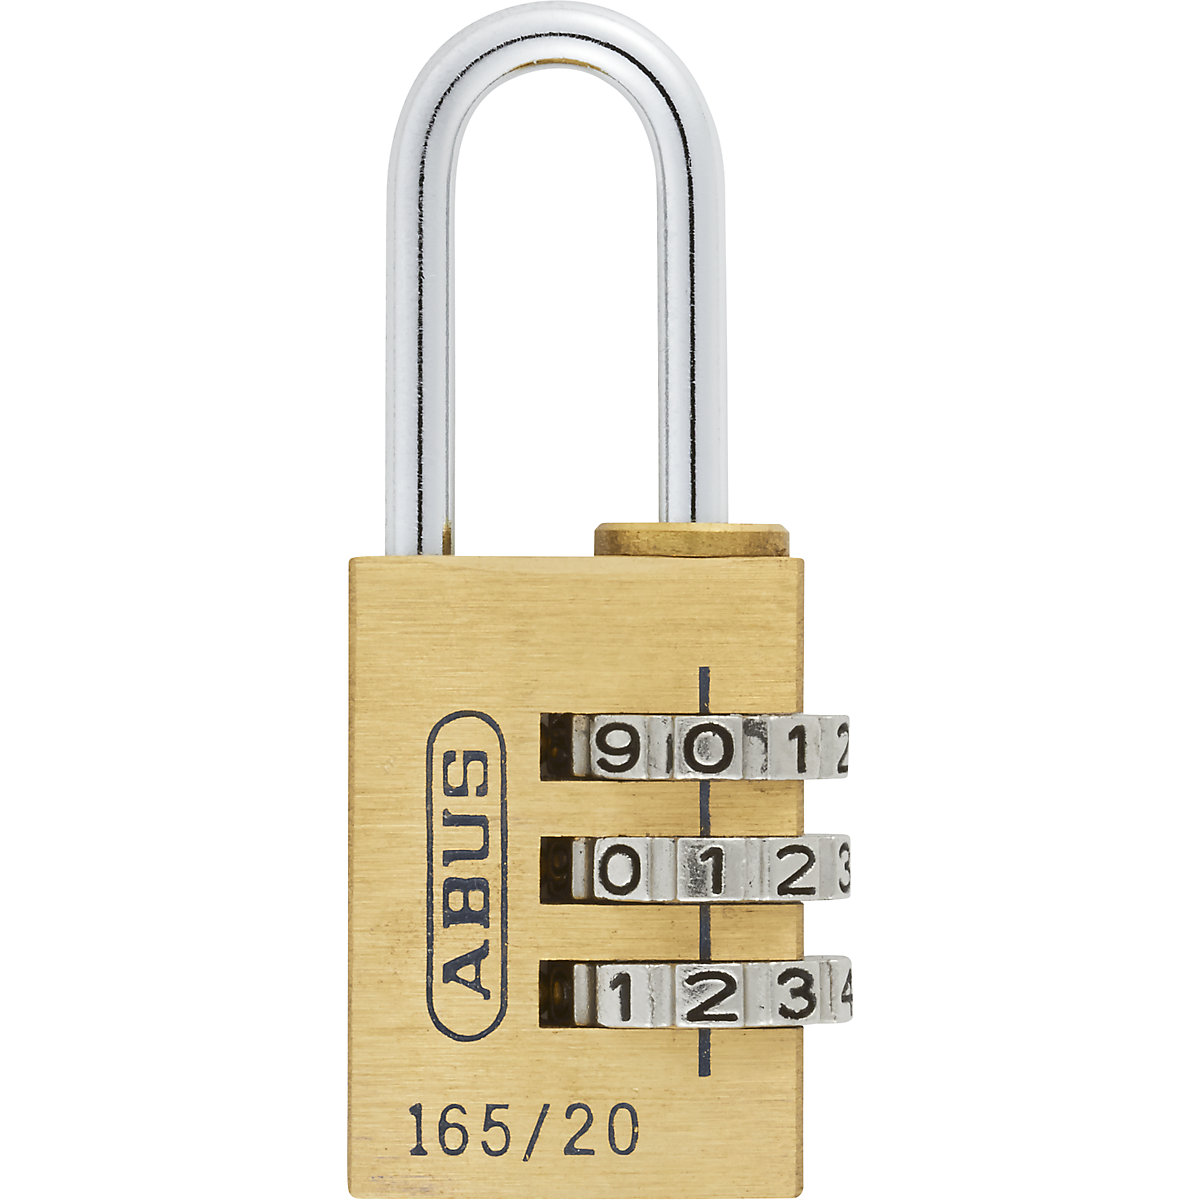 Combination lock – ABUS